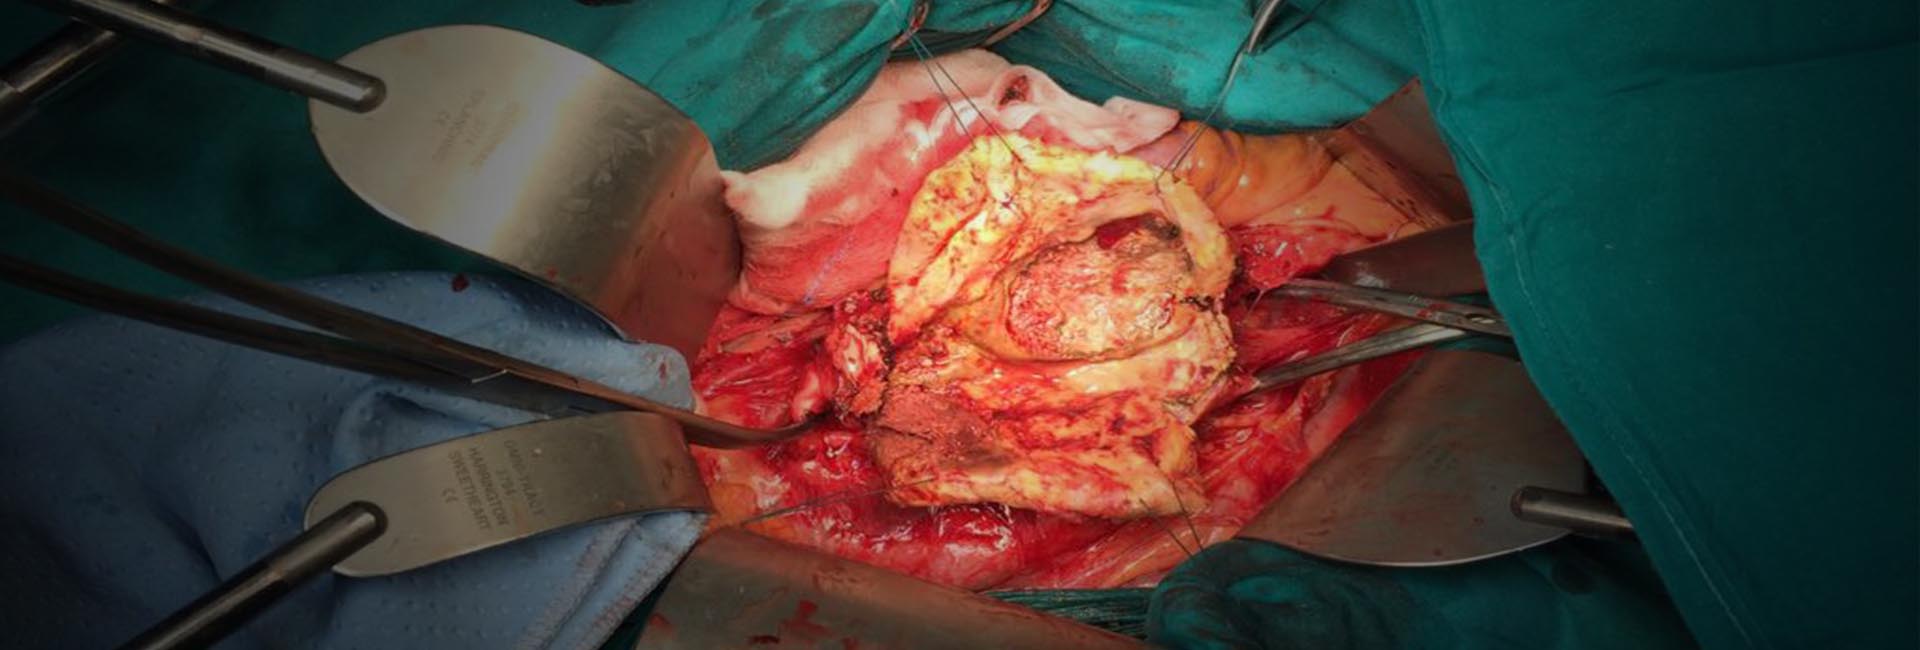 operaztion aorta from doctor Emerico Ballo Cardio surgeon